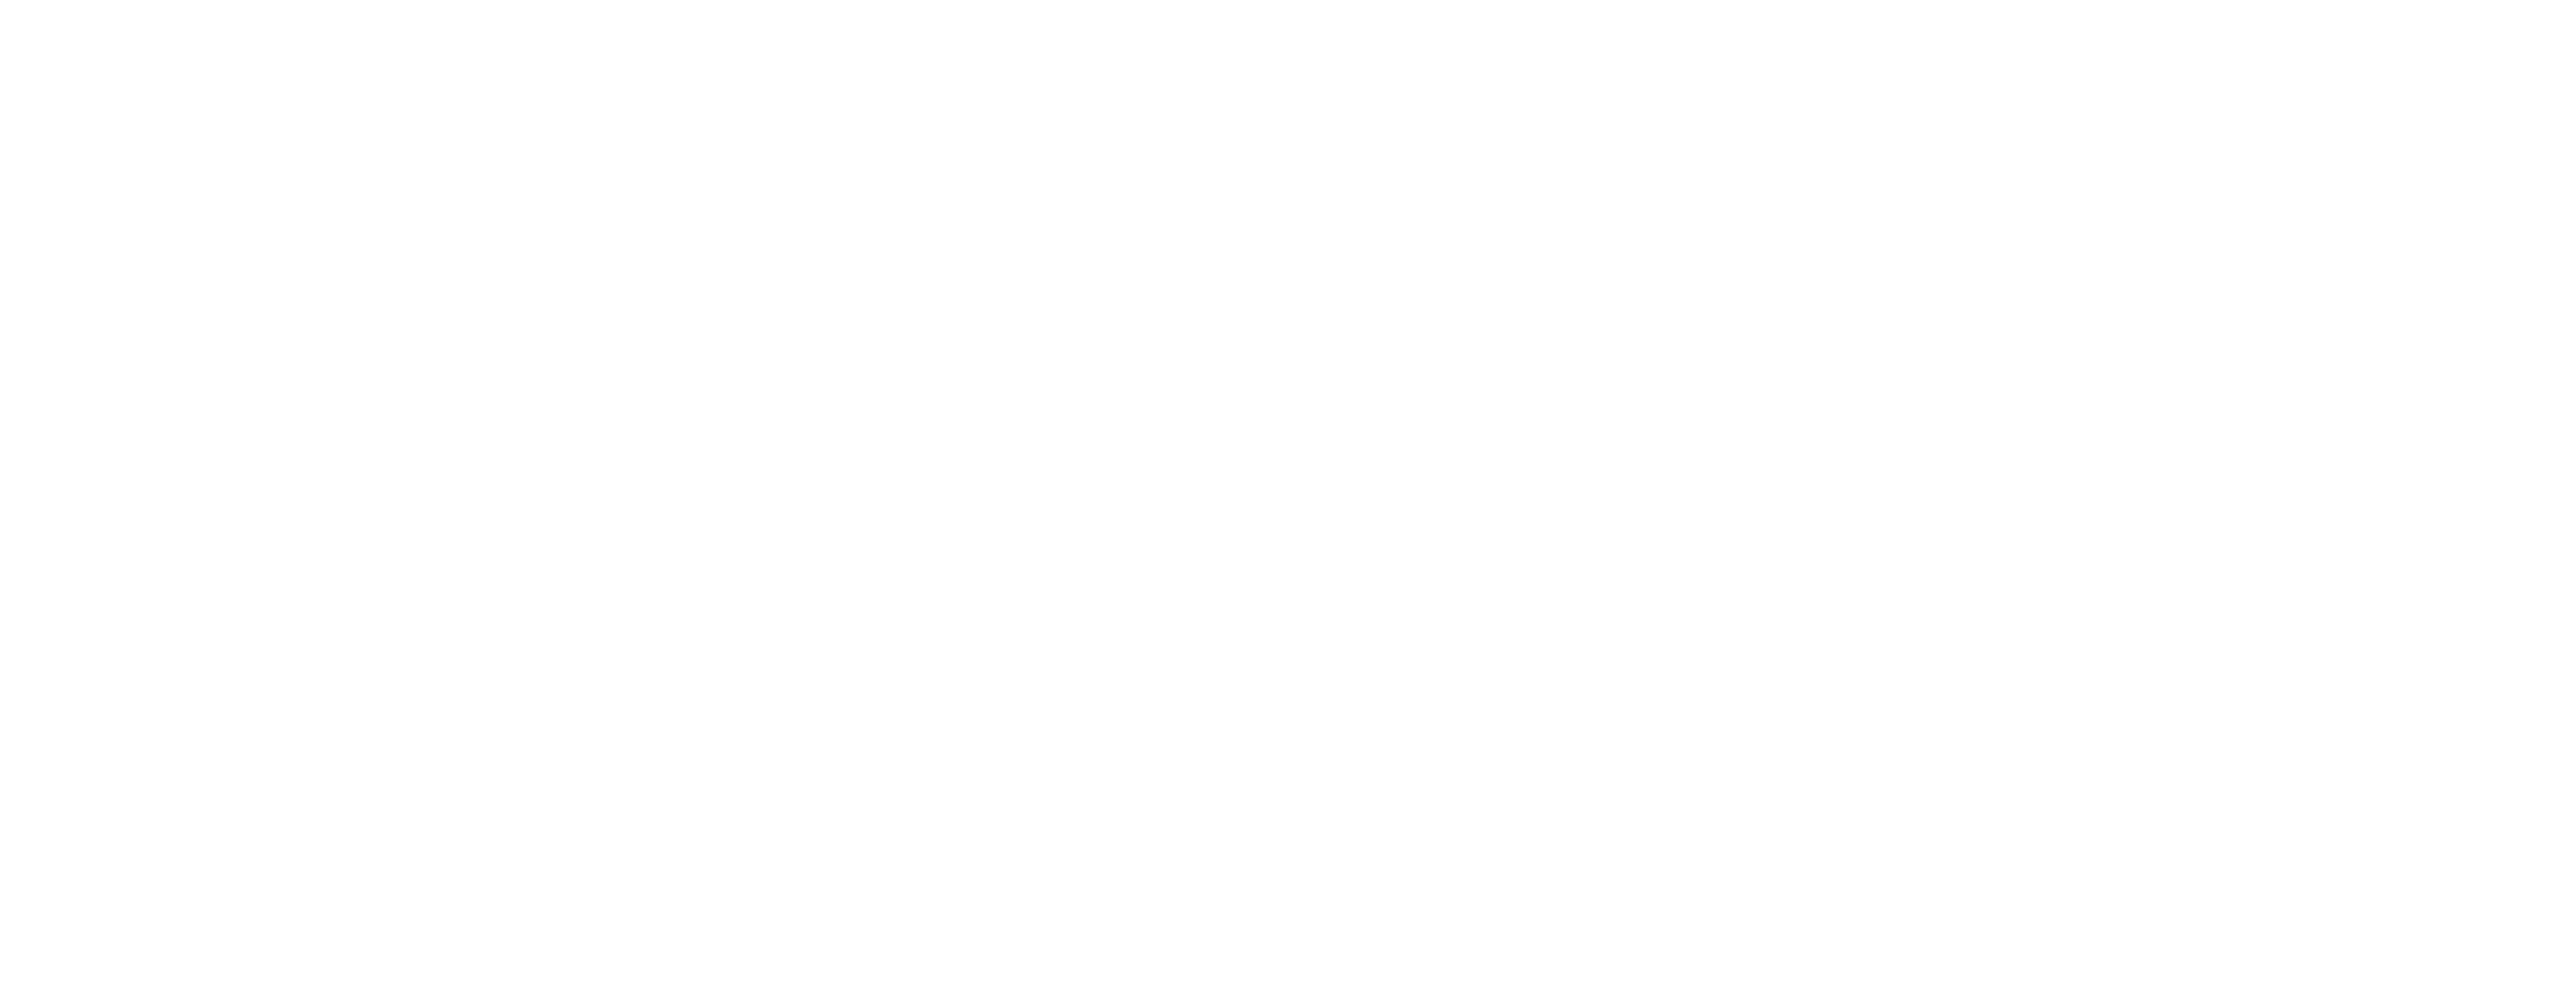 Mobile Mortgage Mom